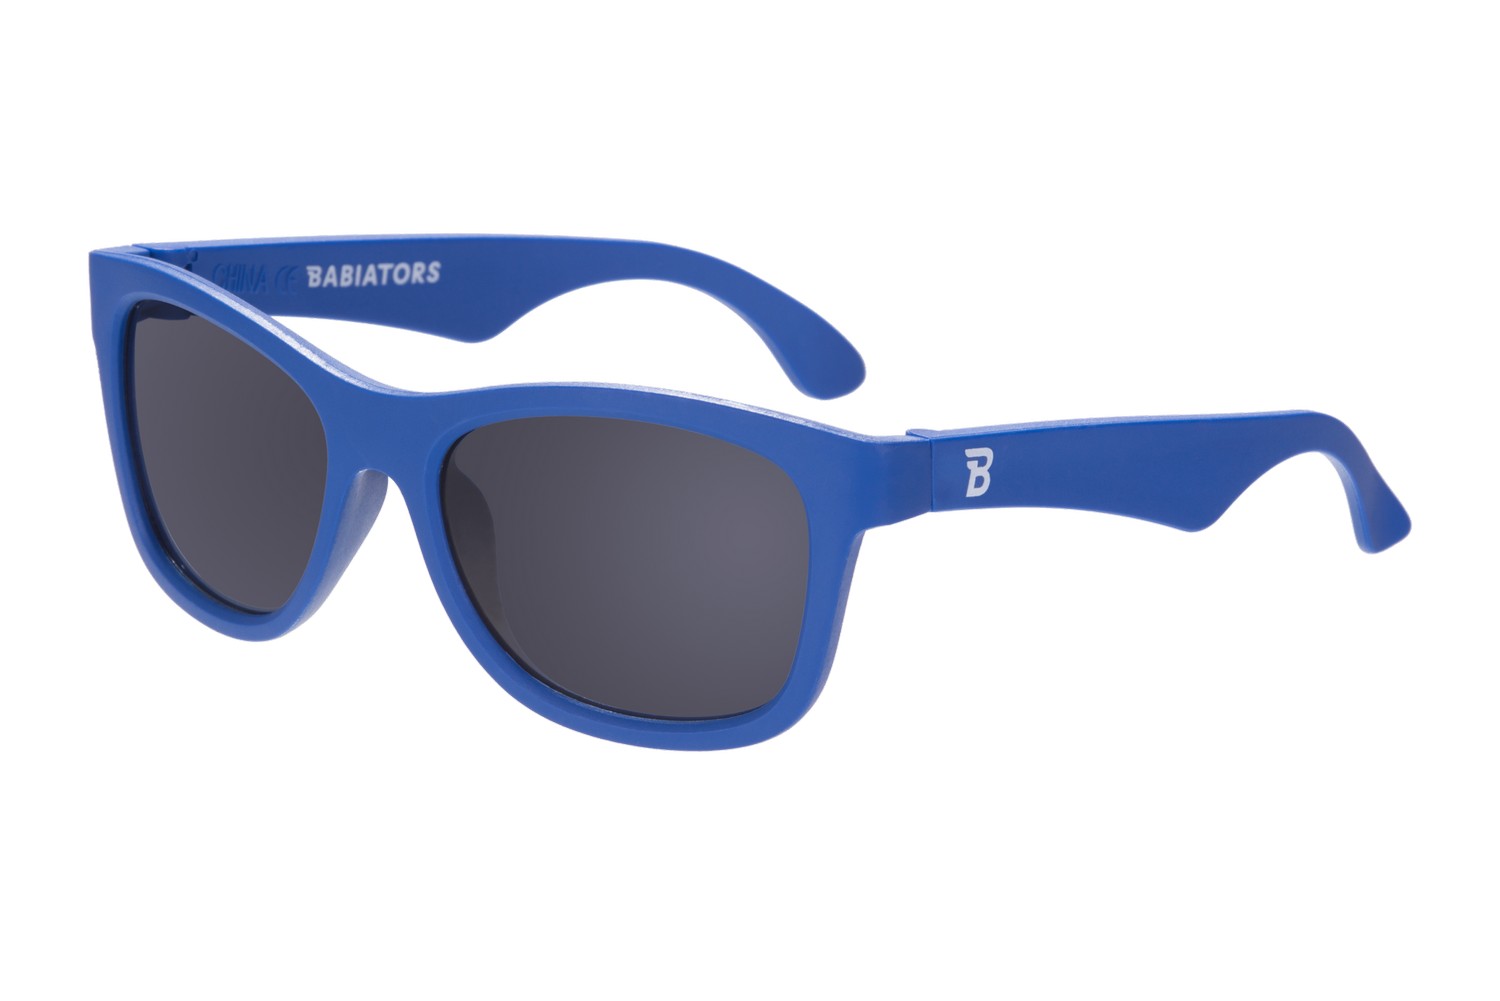 Babiators - UV sunglasses for kids - Navigators - Originals - Good Blue